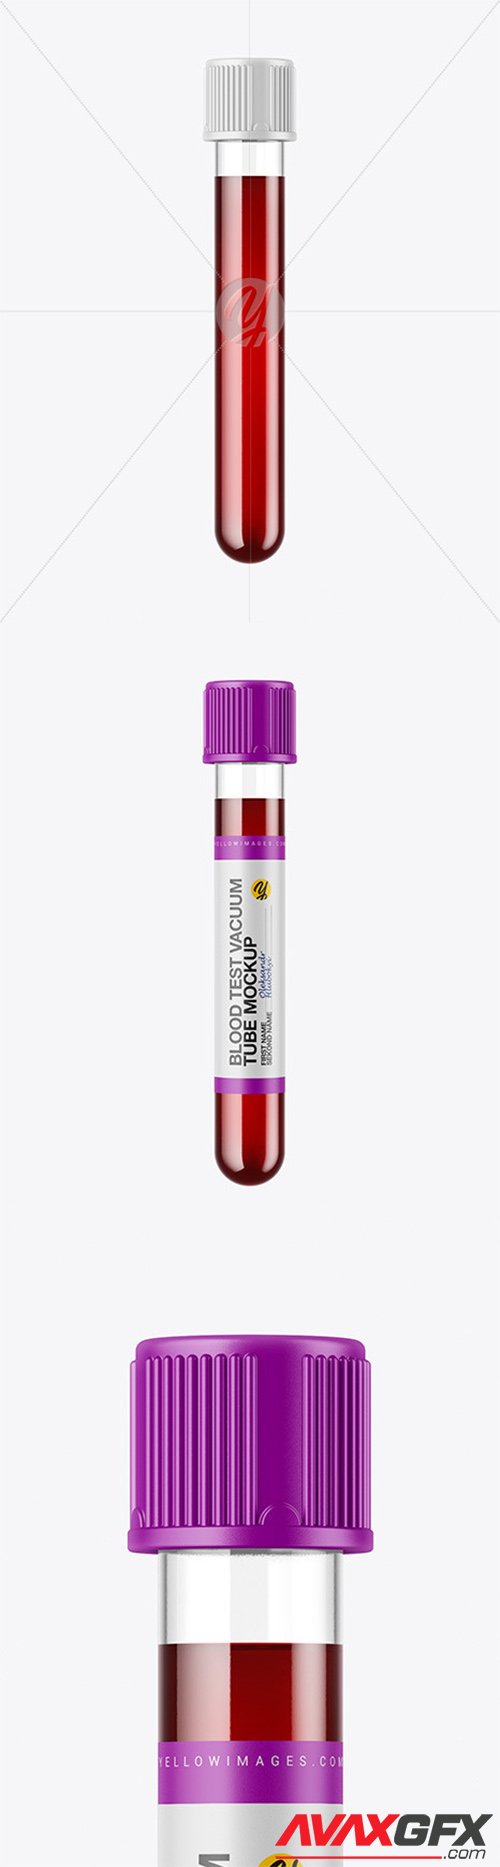 Blood Test Tube Mockup 58191